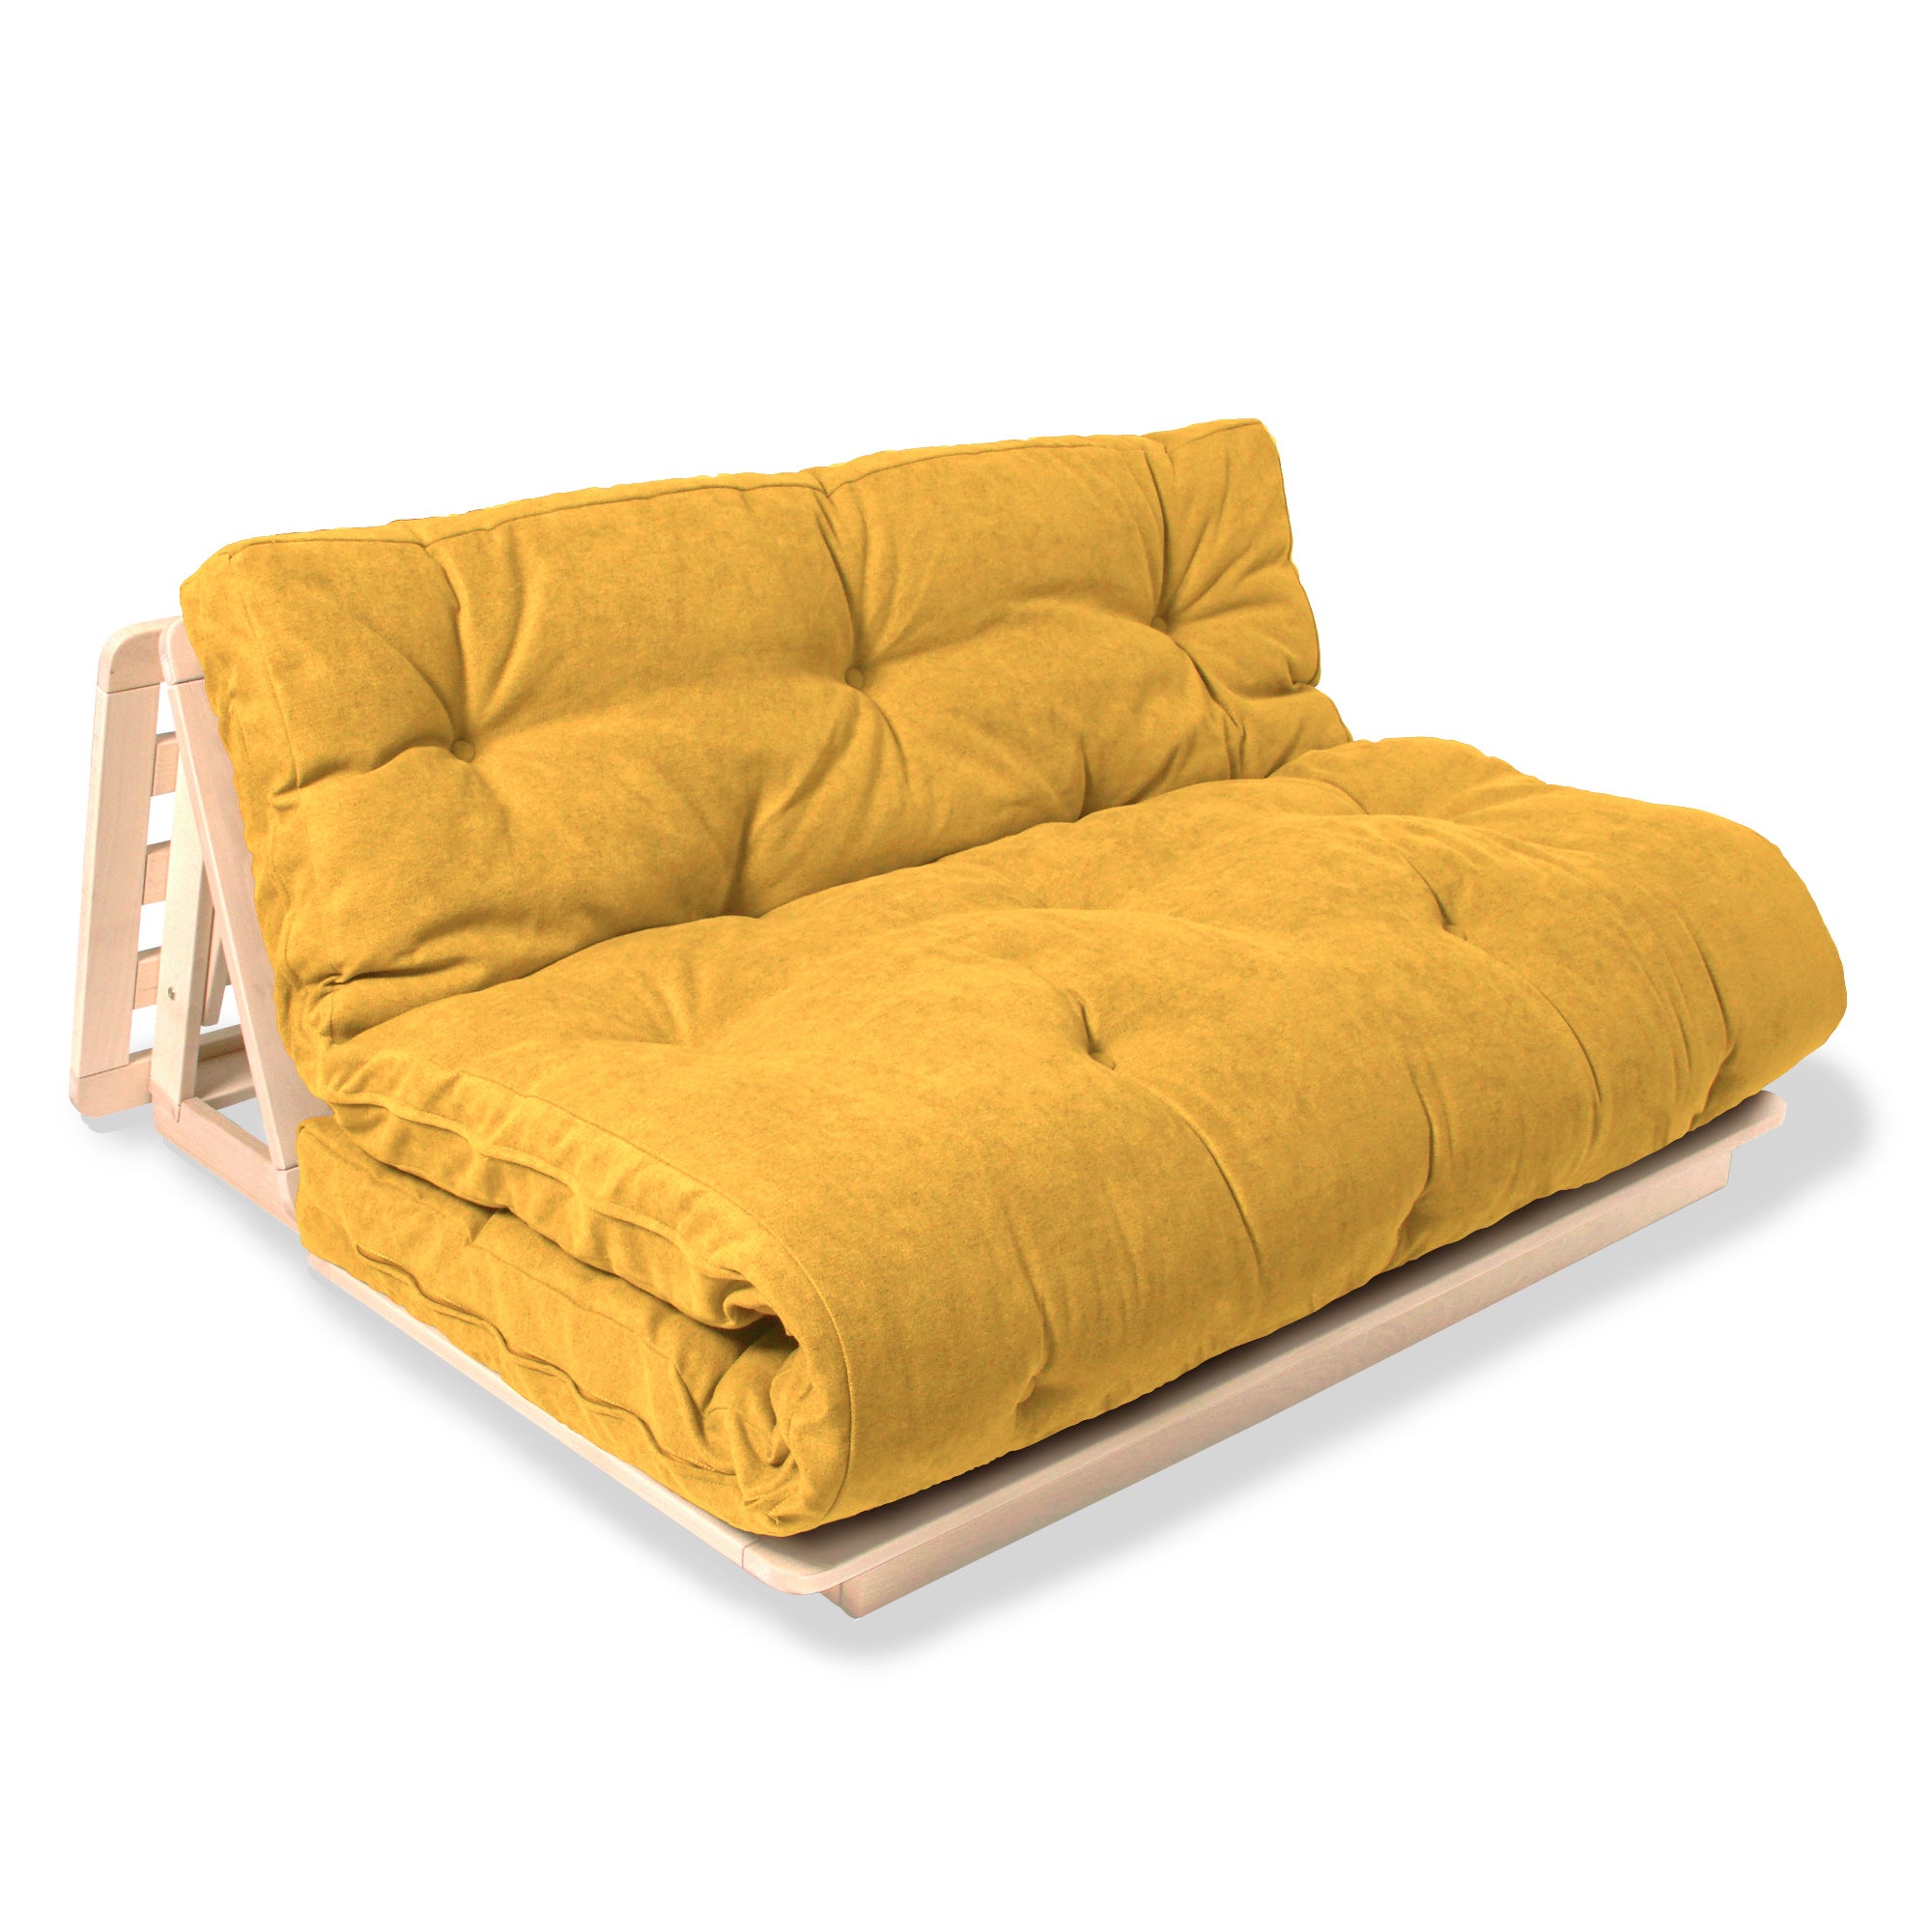 LAYTI-140 Futon Chair, Beech Wood, Natural Colour-yellow fabric